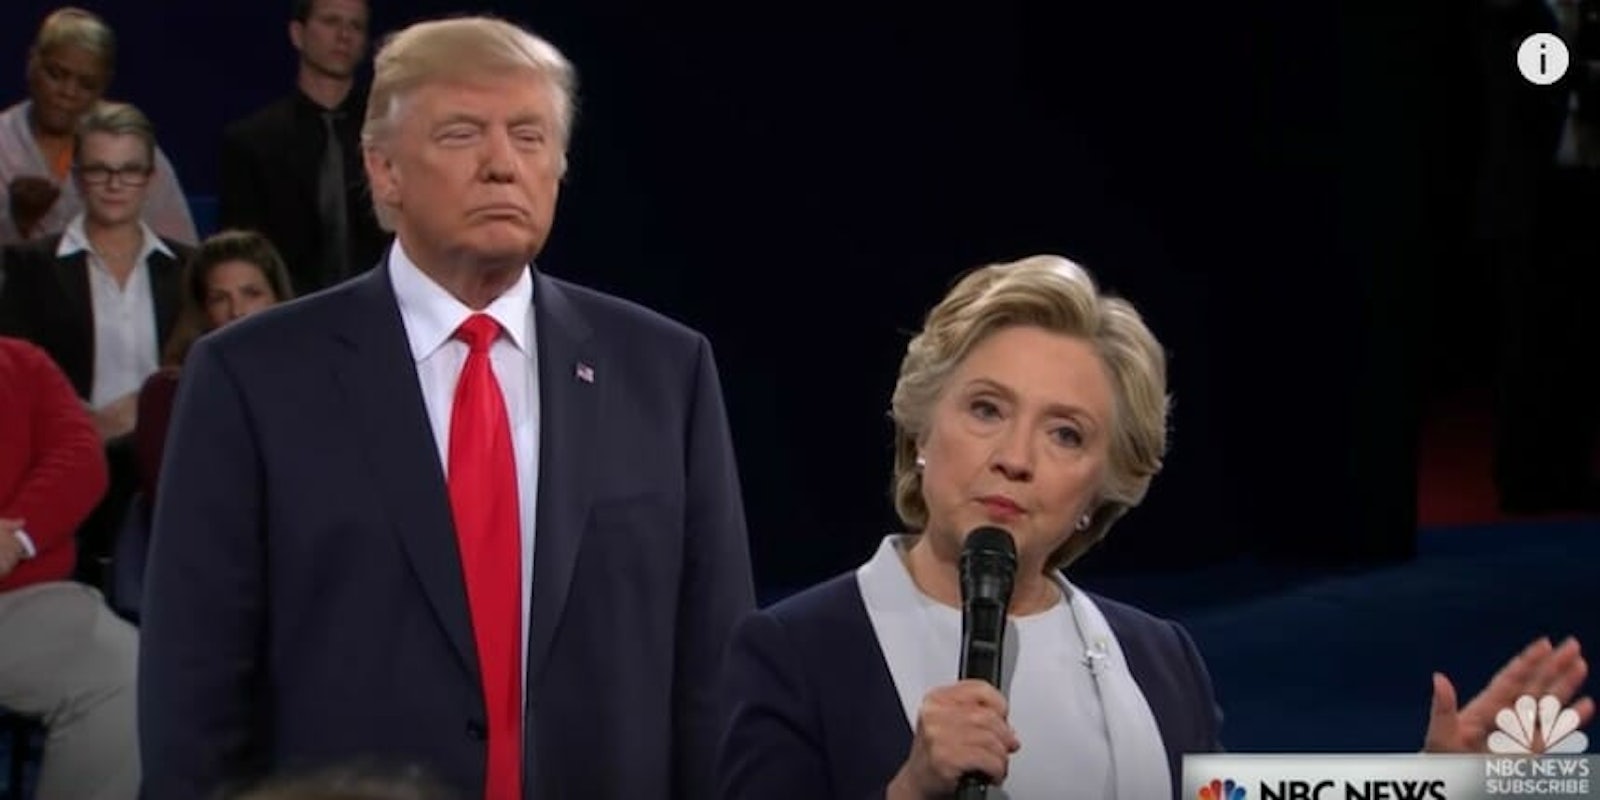 Hillary Clinton Donald Trump second debate